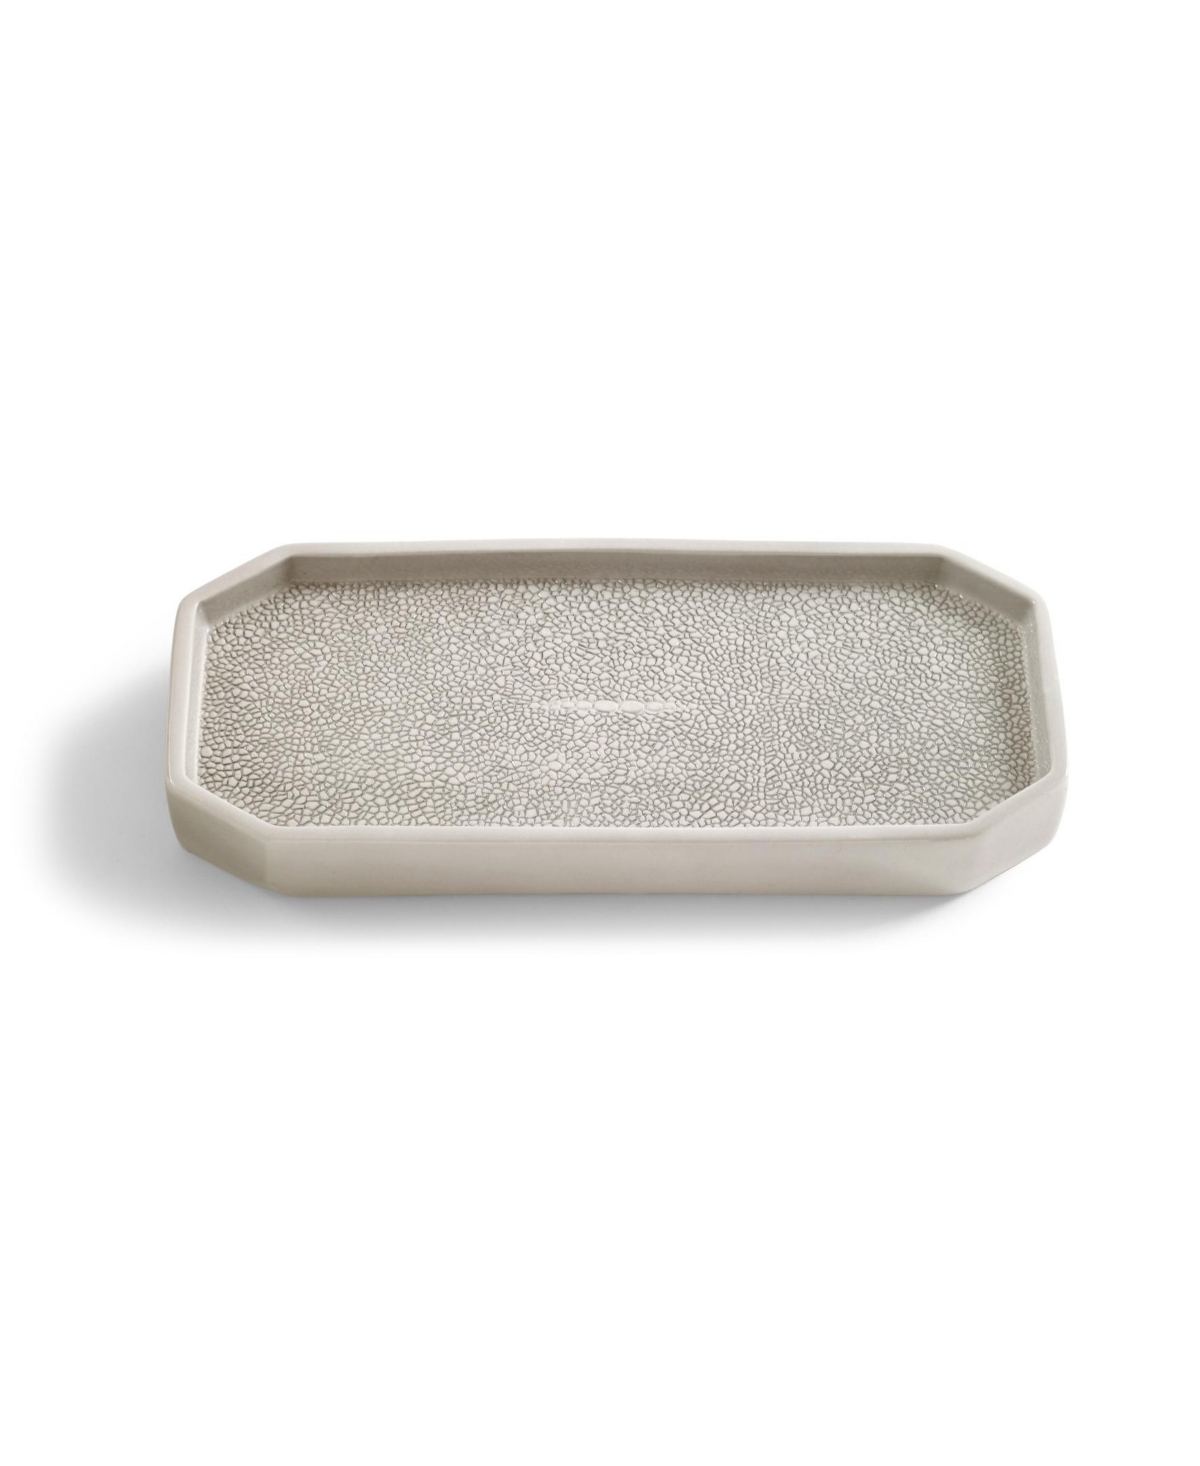 Regent Porcelain Bathroom Tray - Gray